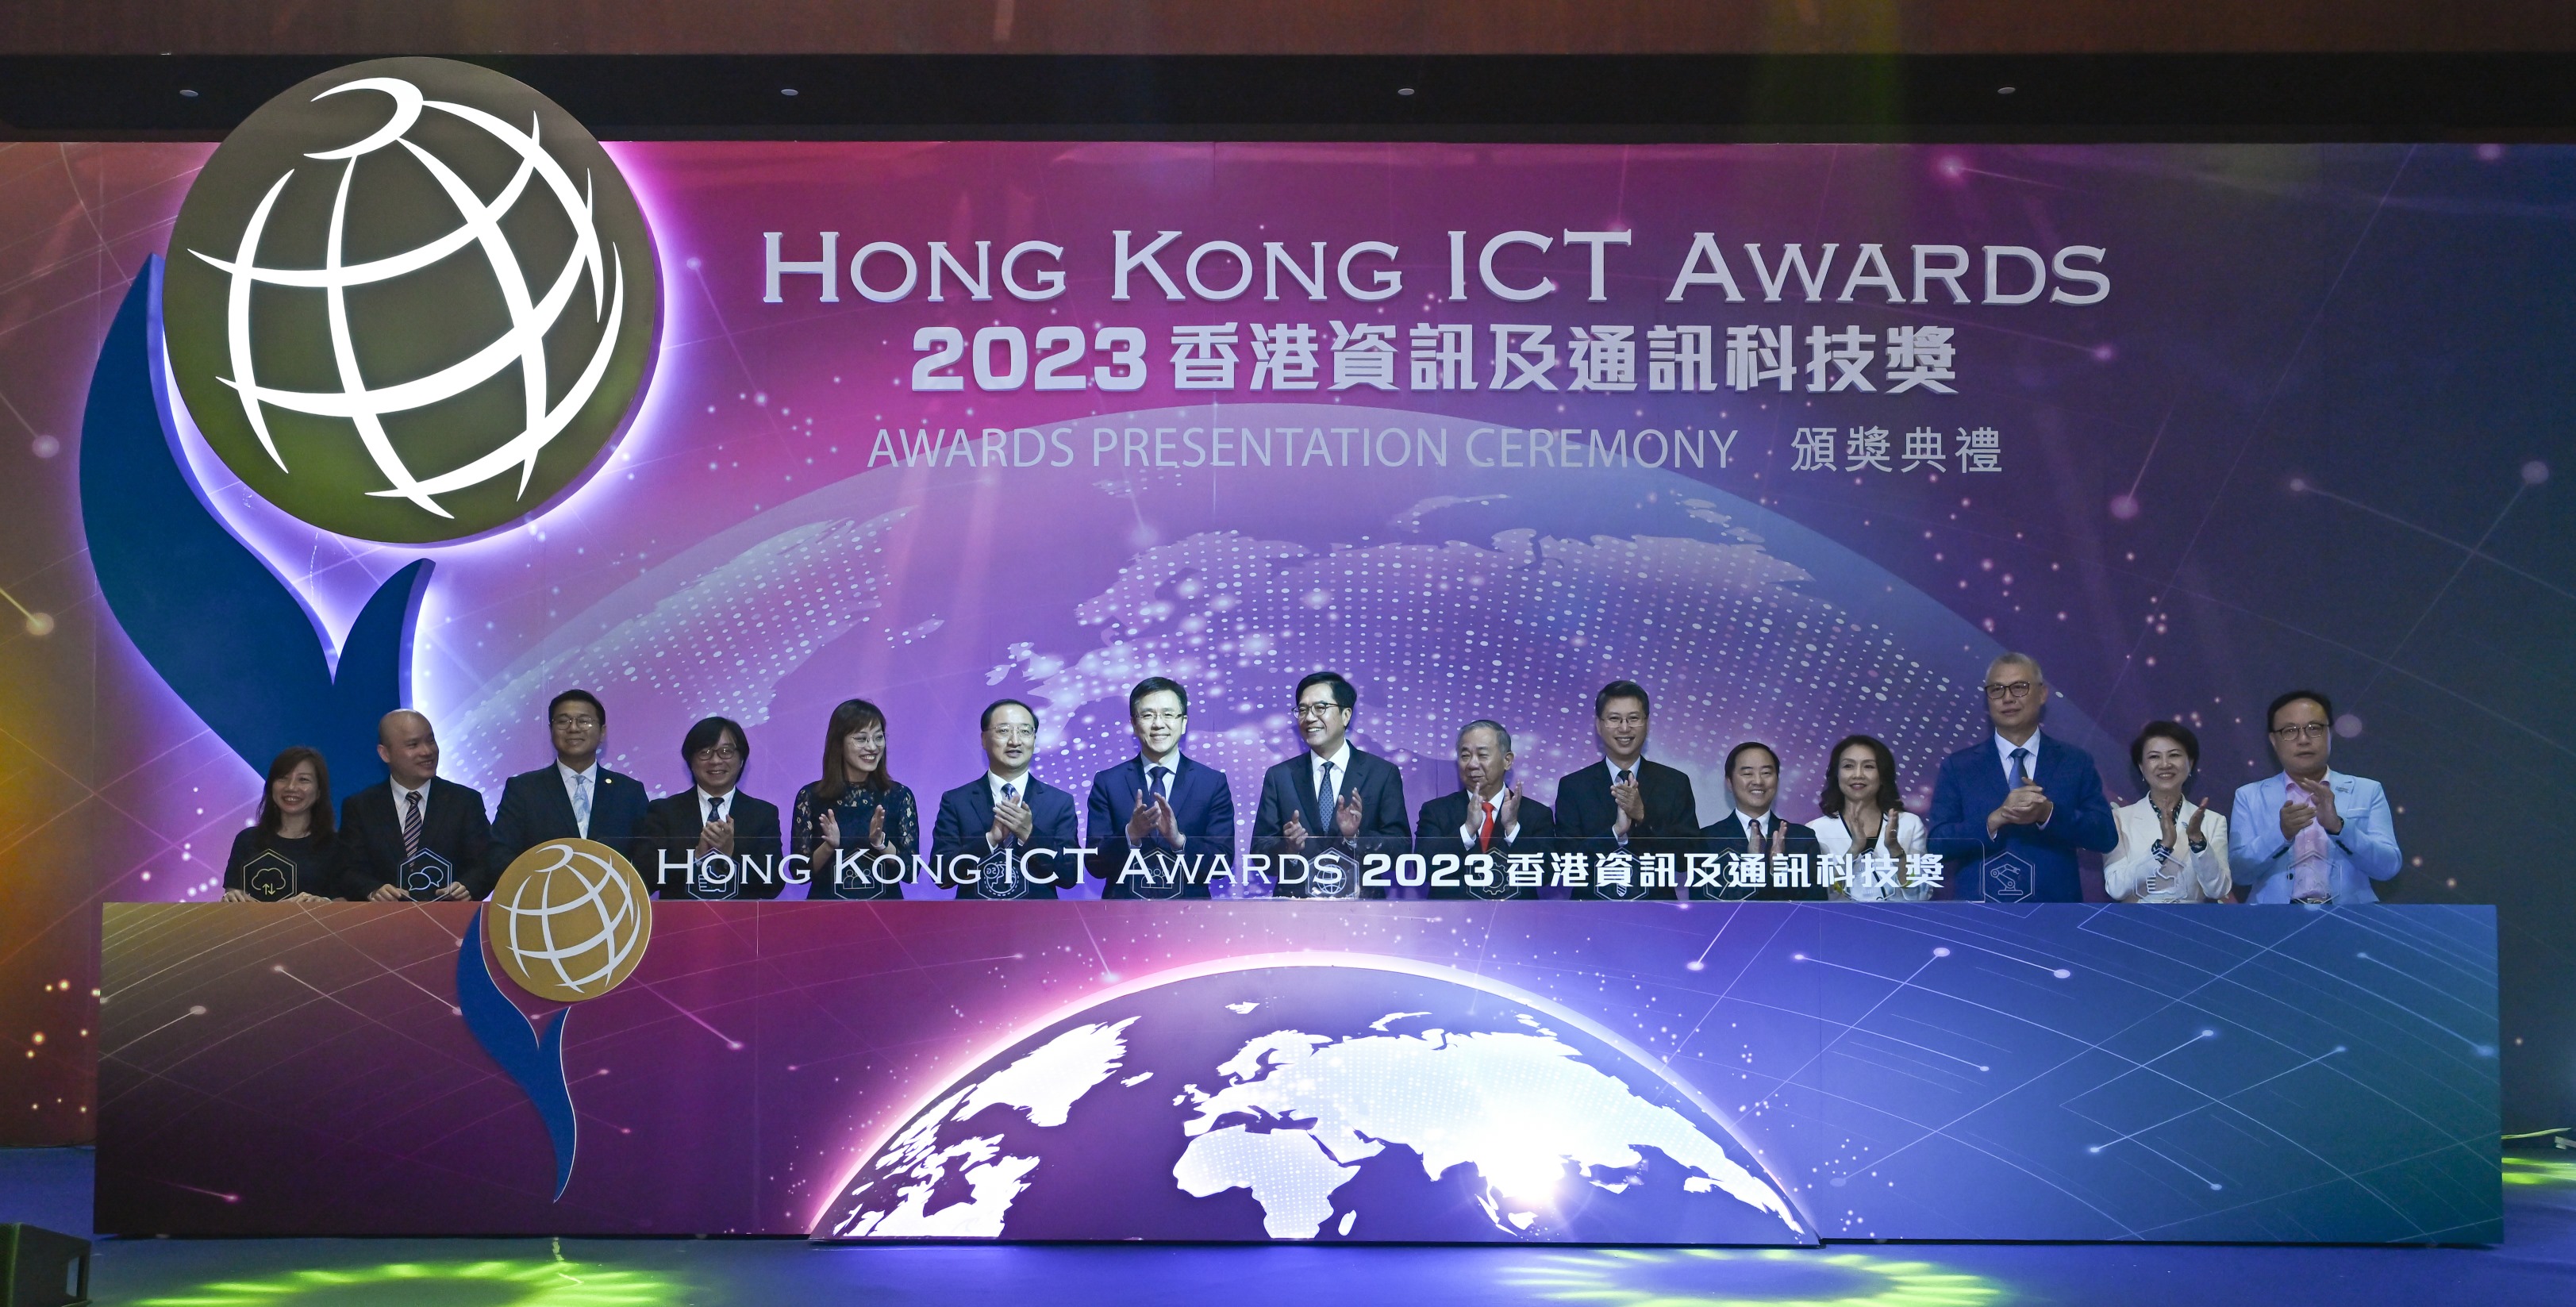 Hong Kong ICT Awards 2023 Awards Presentation Ceremony Kick-off Ceremony (after)